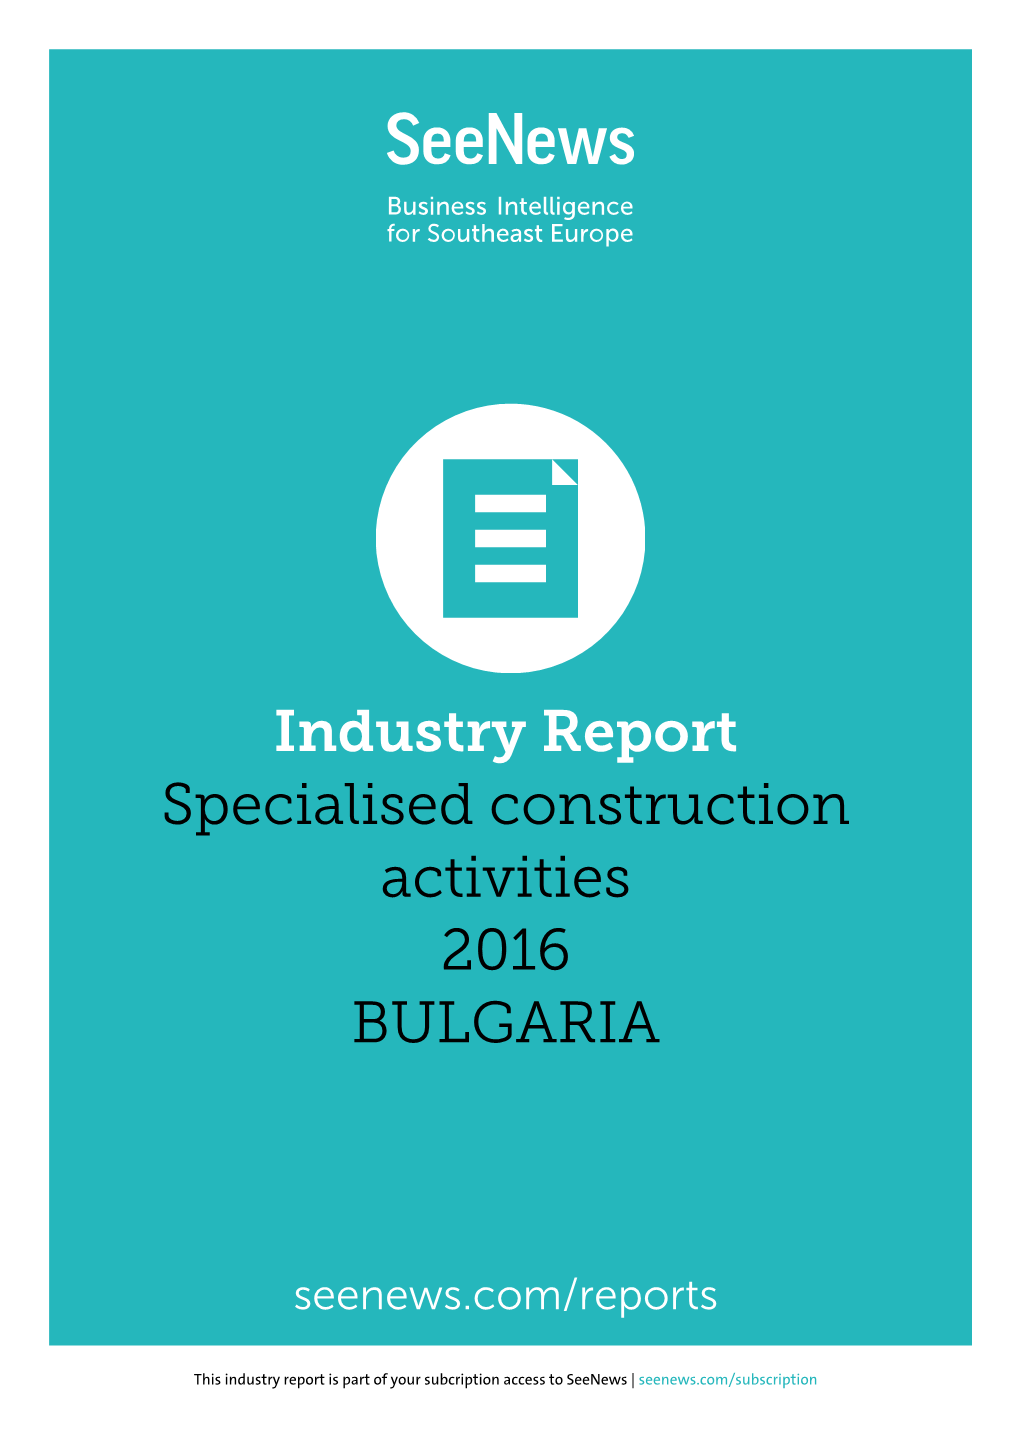 Industry Report Specialised Construction Activities 2016 BULGARIA